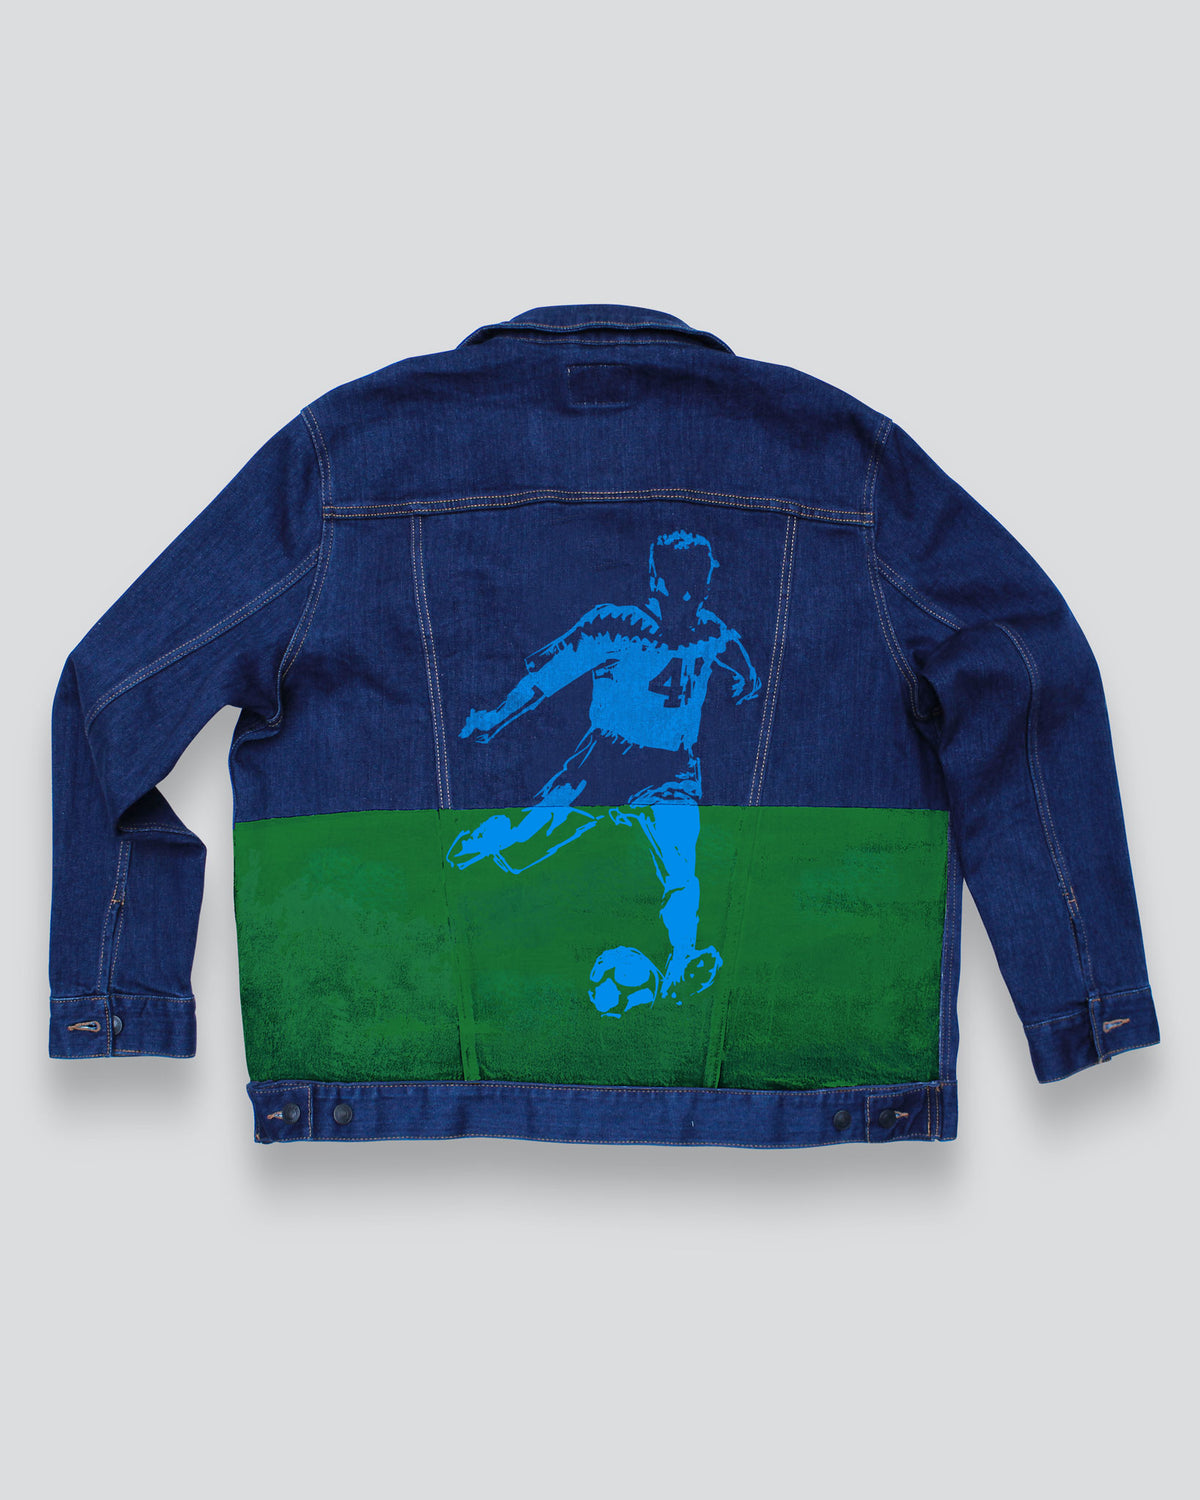 ALL-STAR Soccer Denim Jacket